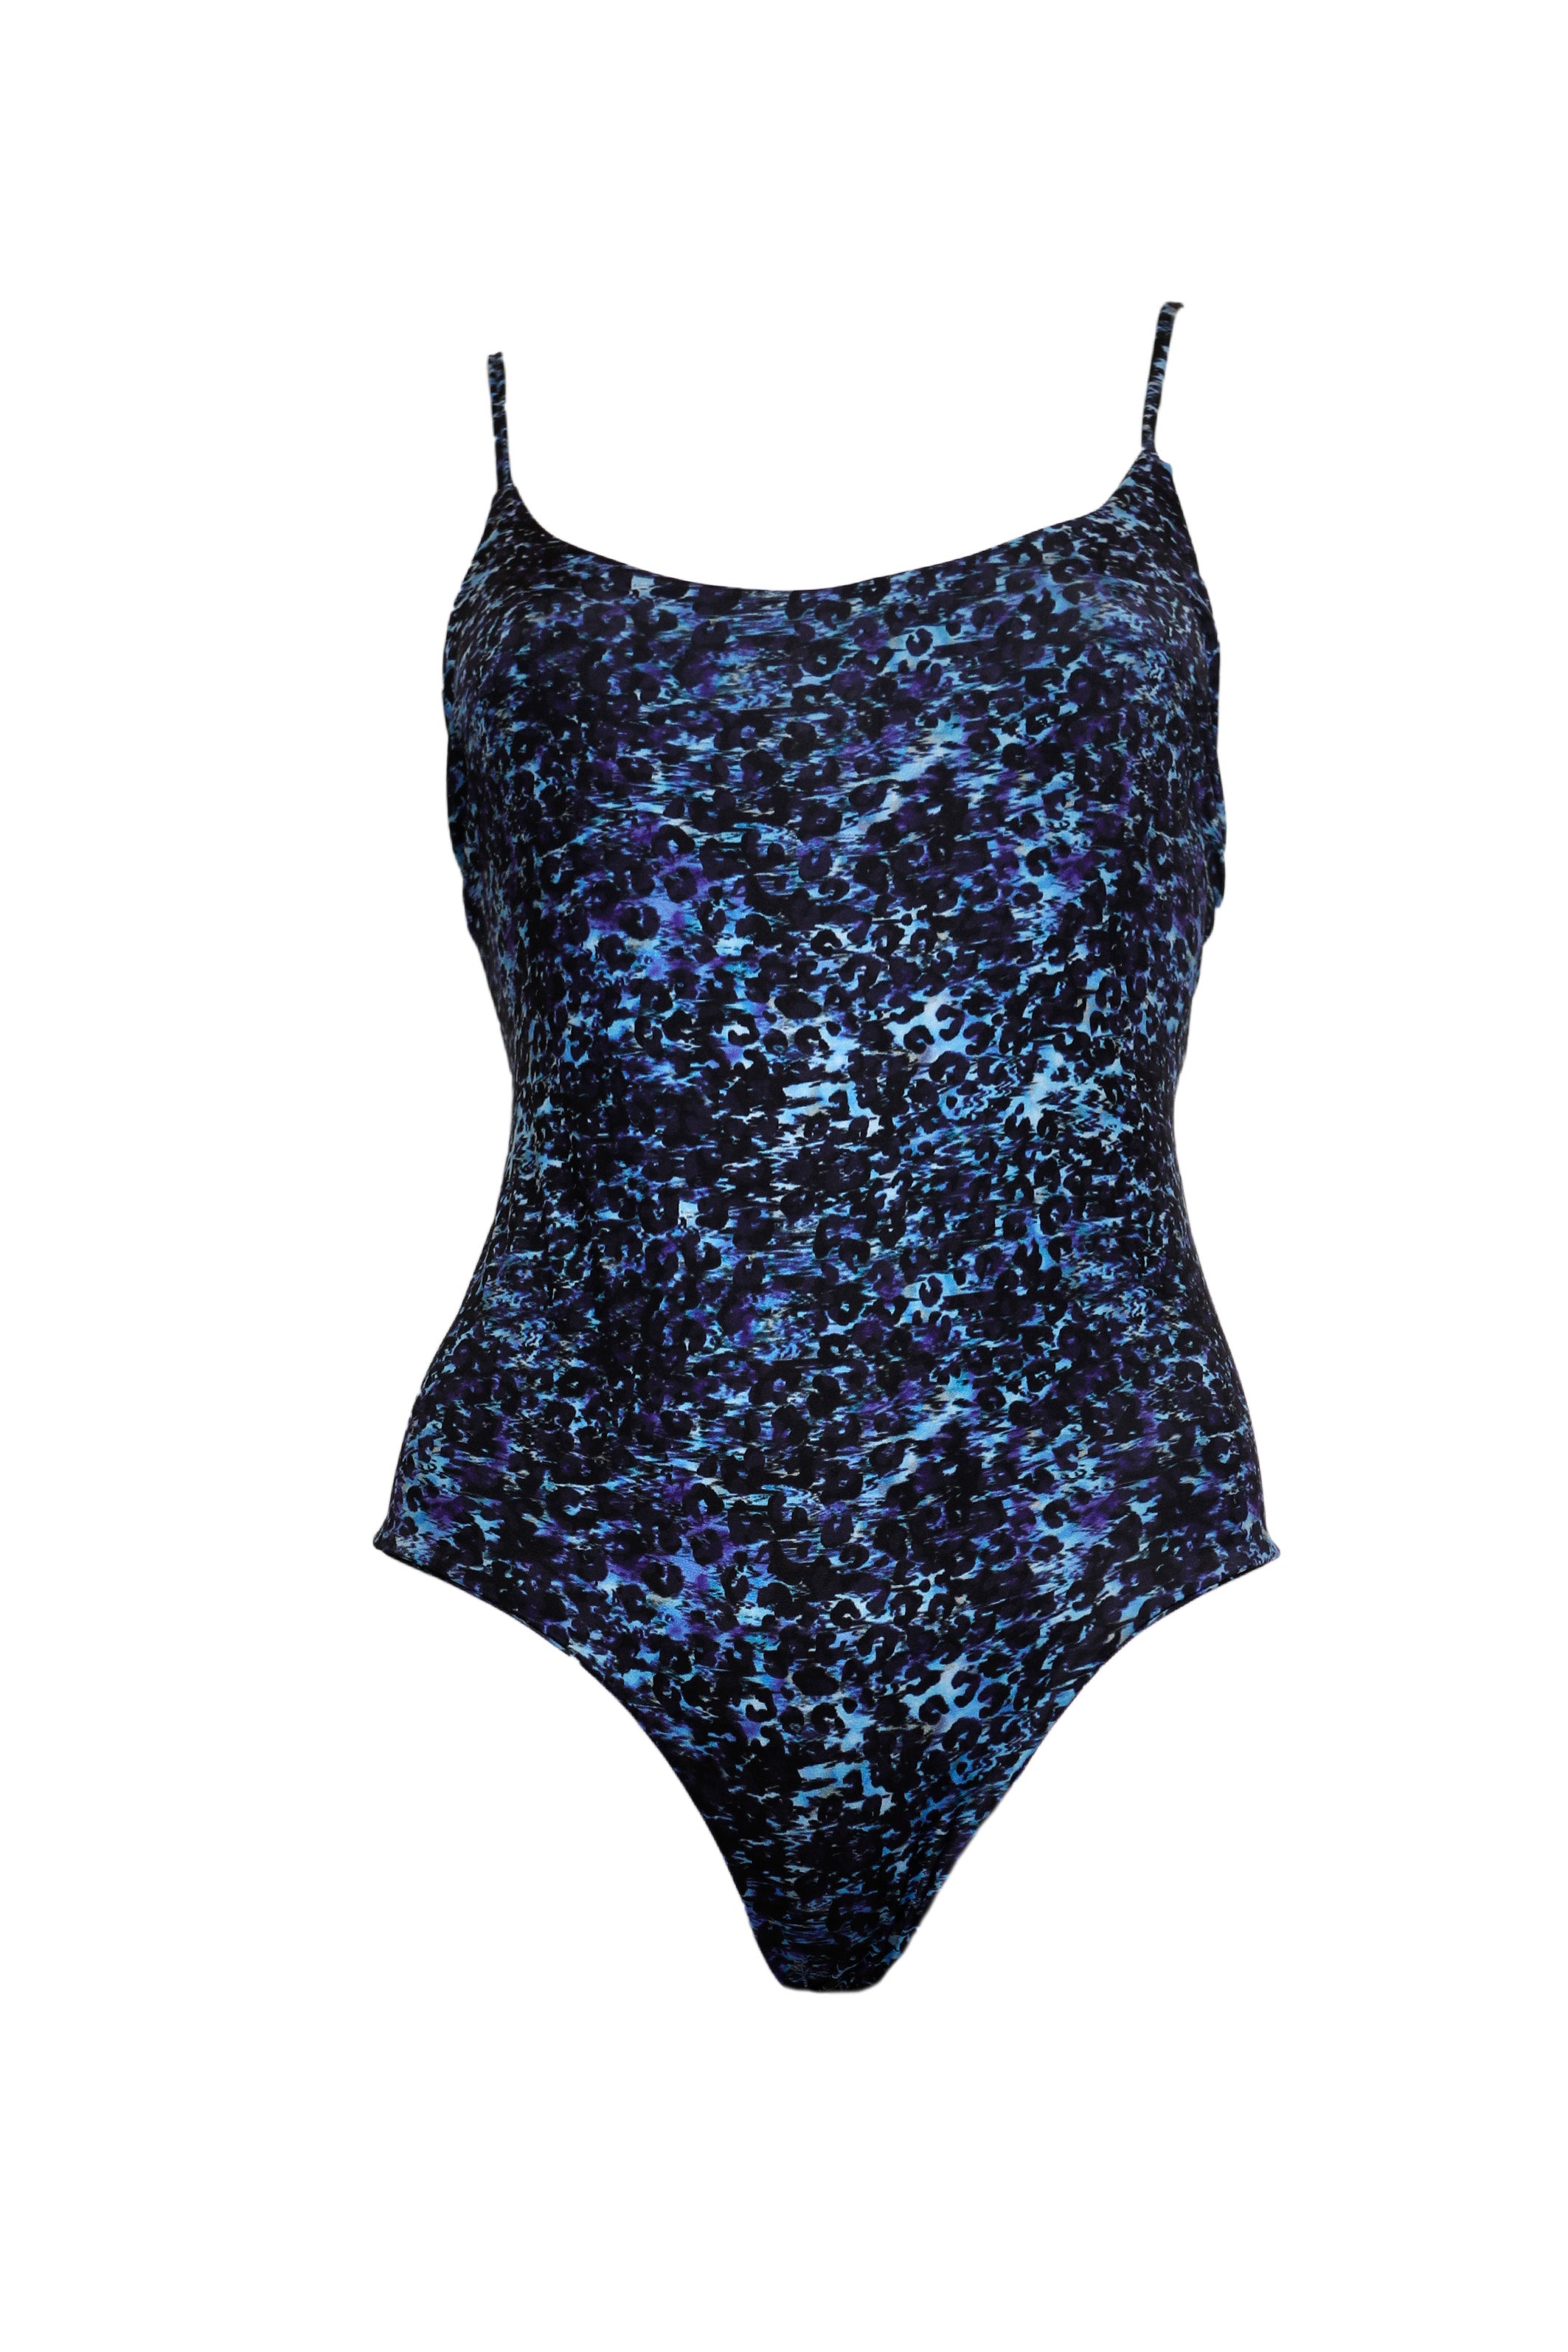 FEDERICA - One-piece swimsuit in blue animal print lycra